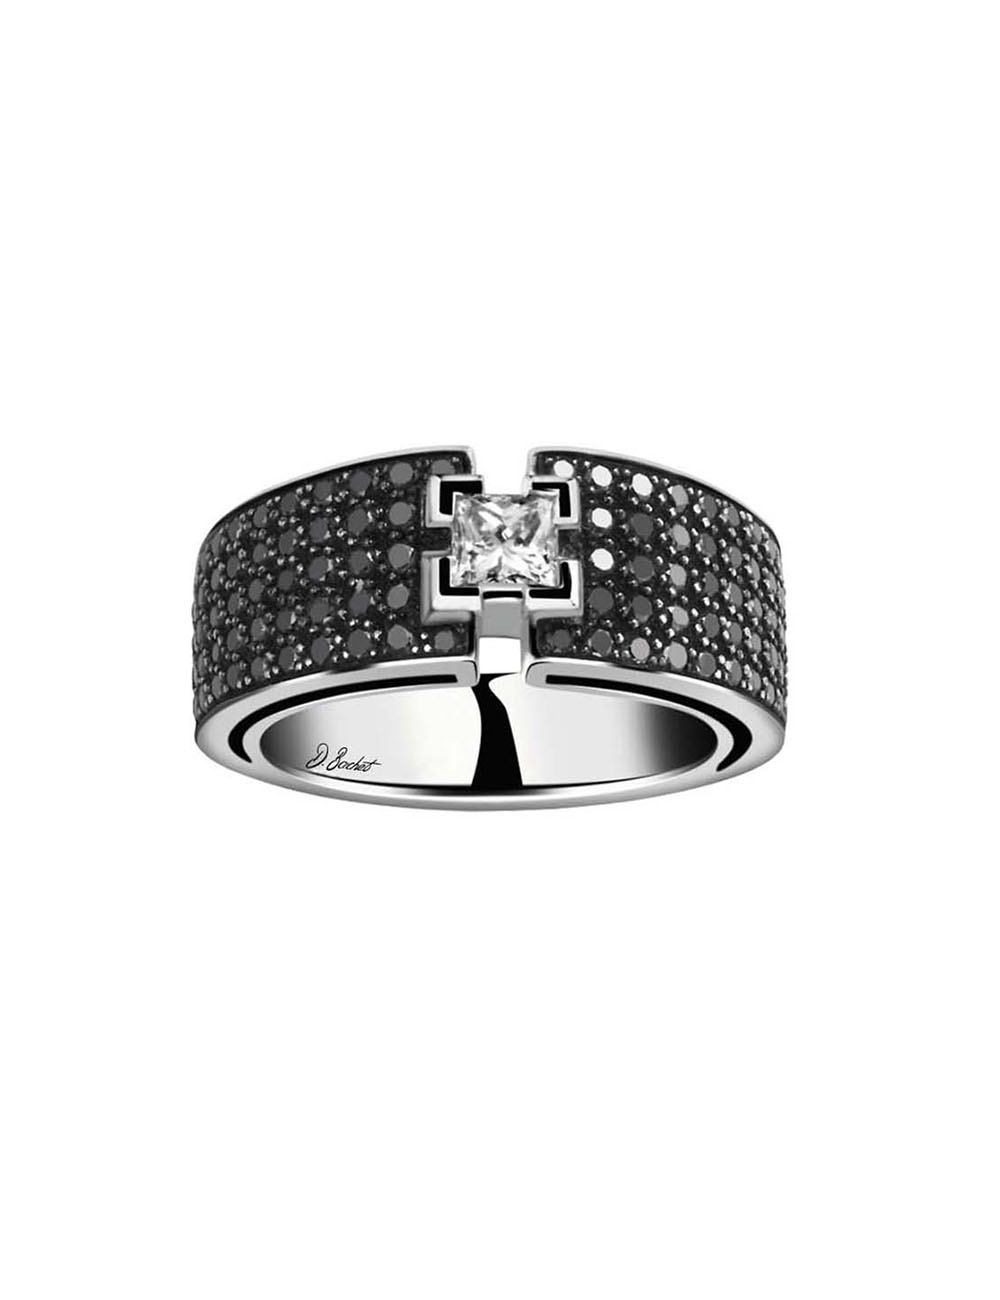 Luxury diamond engagement ring for women, 0.30 carat princess-cut white diamond and black diamonds